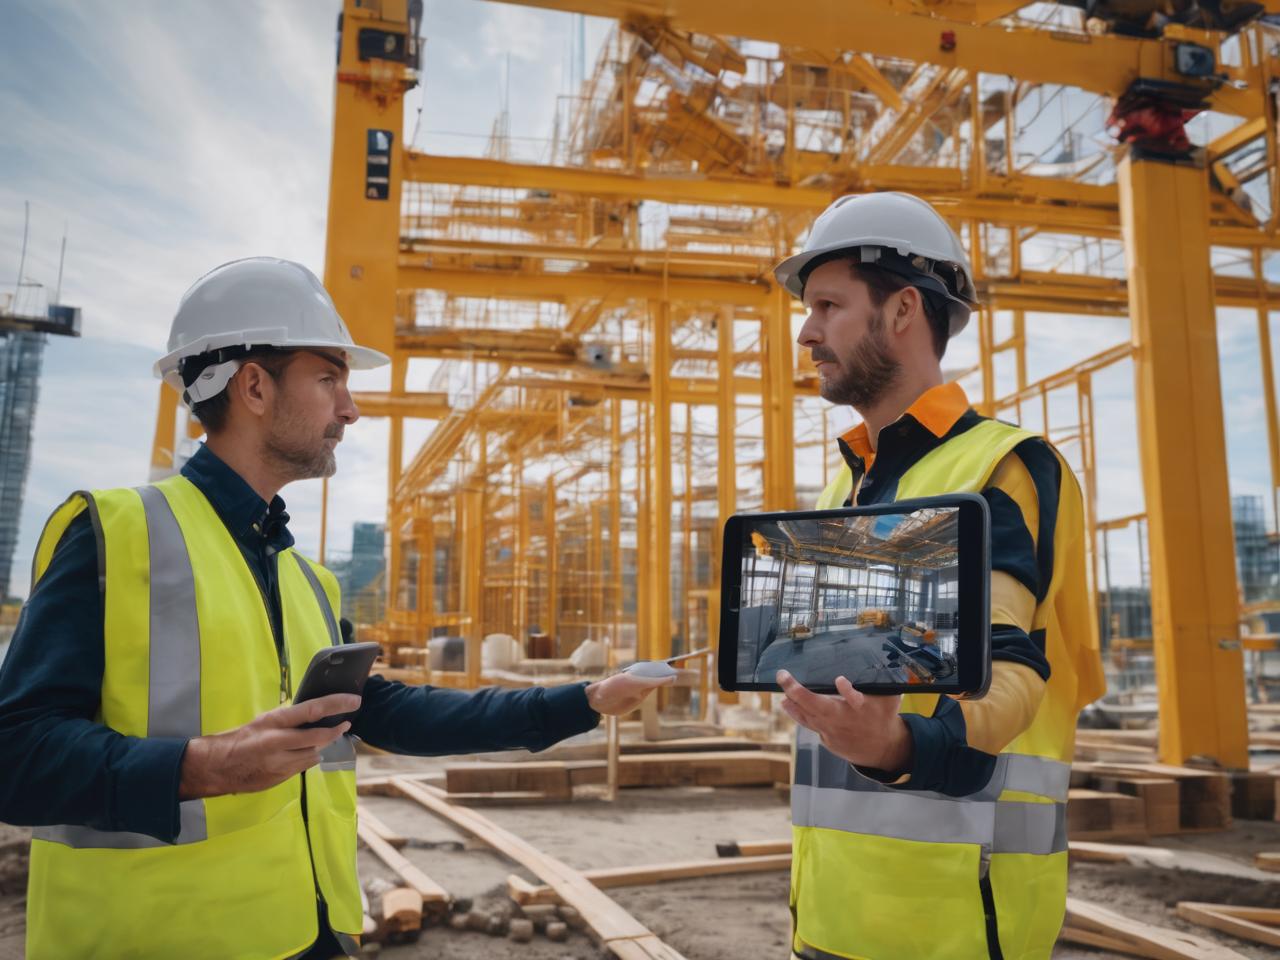 AR/VR in construction industry